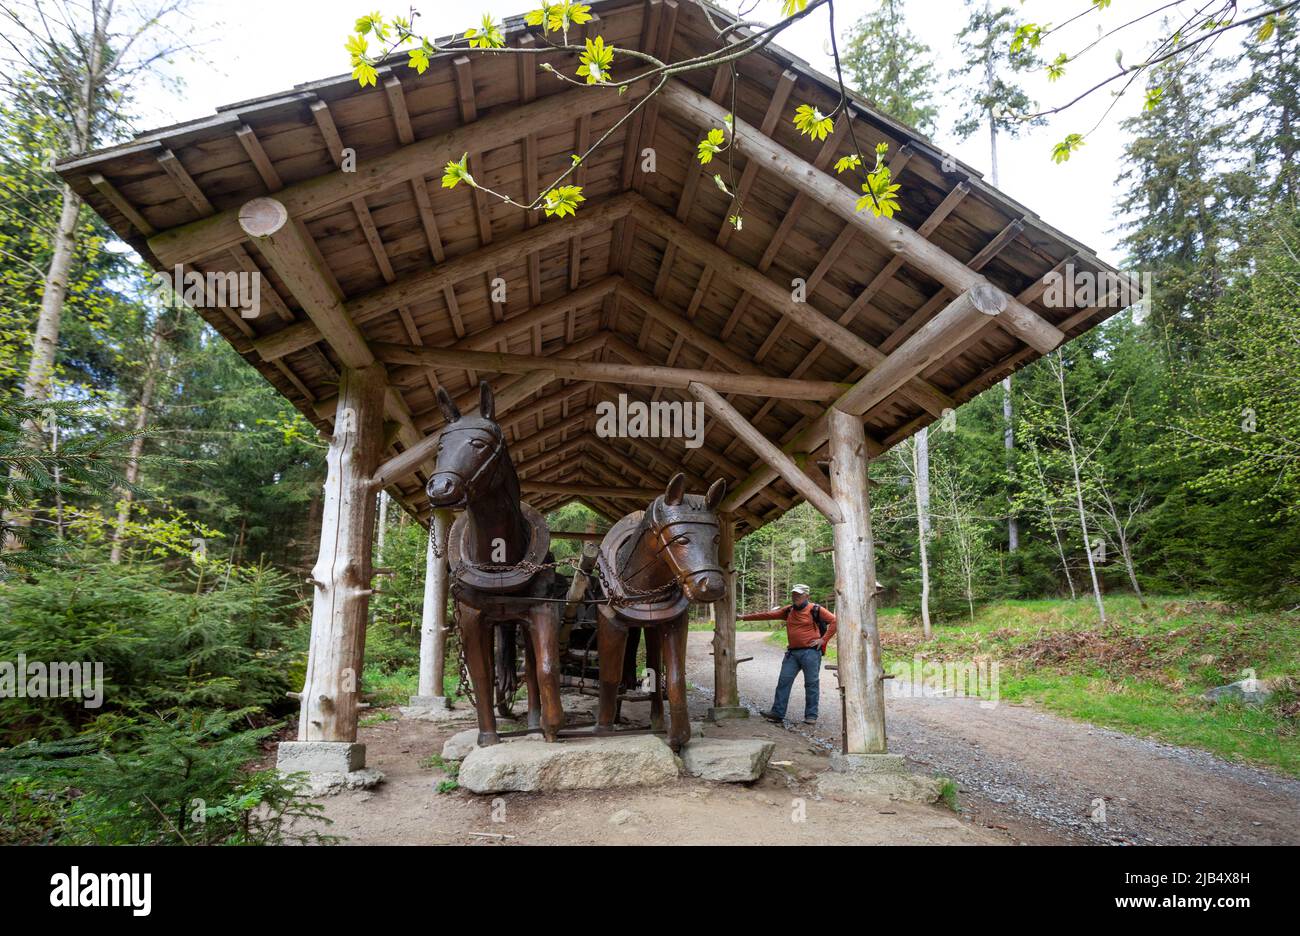 Wooden sculpture, hiker in front of the wooden cart on the Moorwald adventure trail, Bad Leonfelden, Muehlviertel region, Upper Austria, Austria Stock Photo